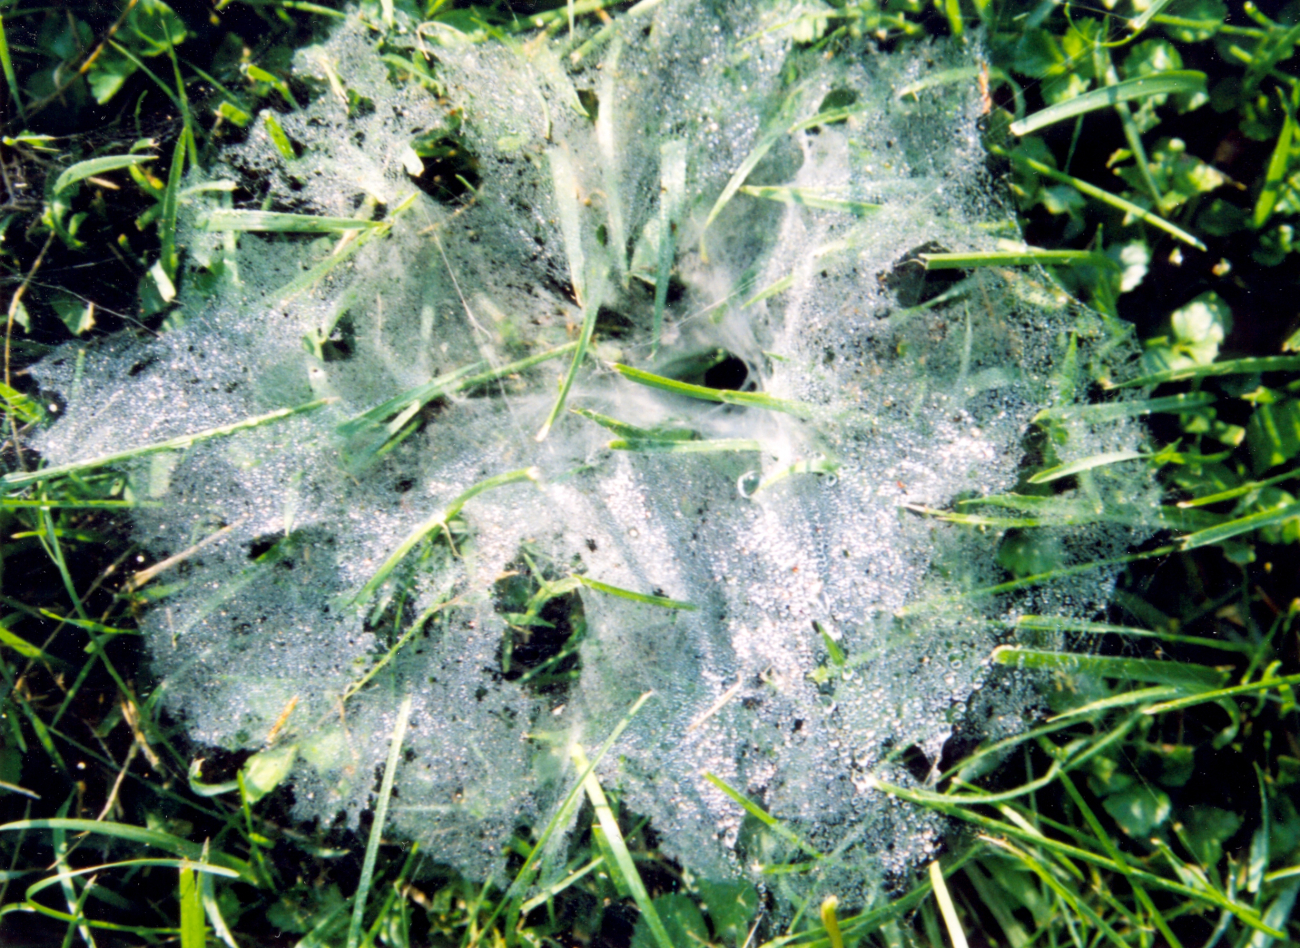 Morning dew on a large basket web